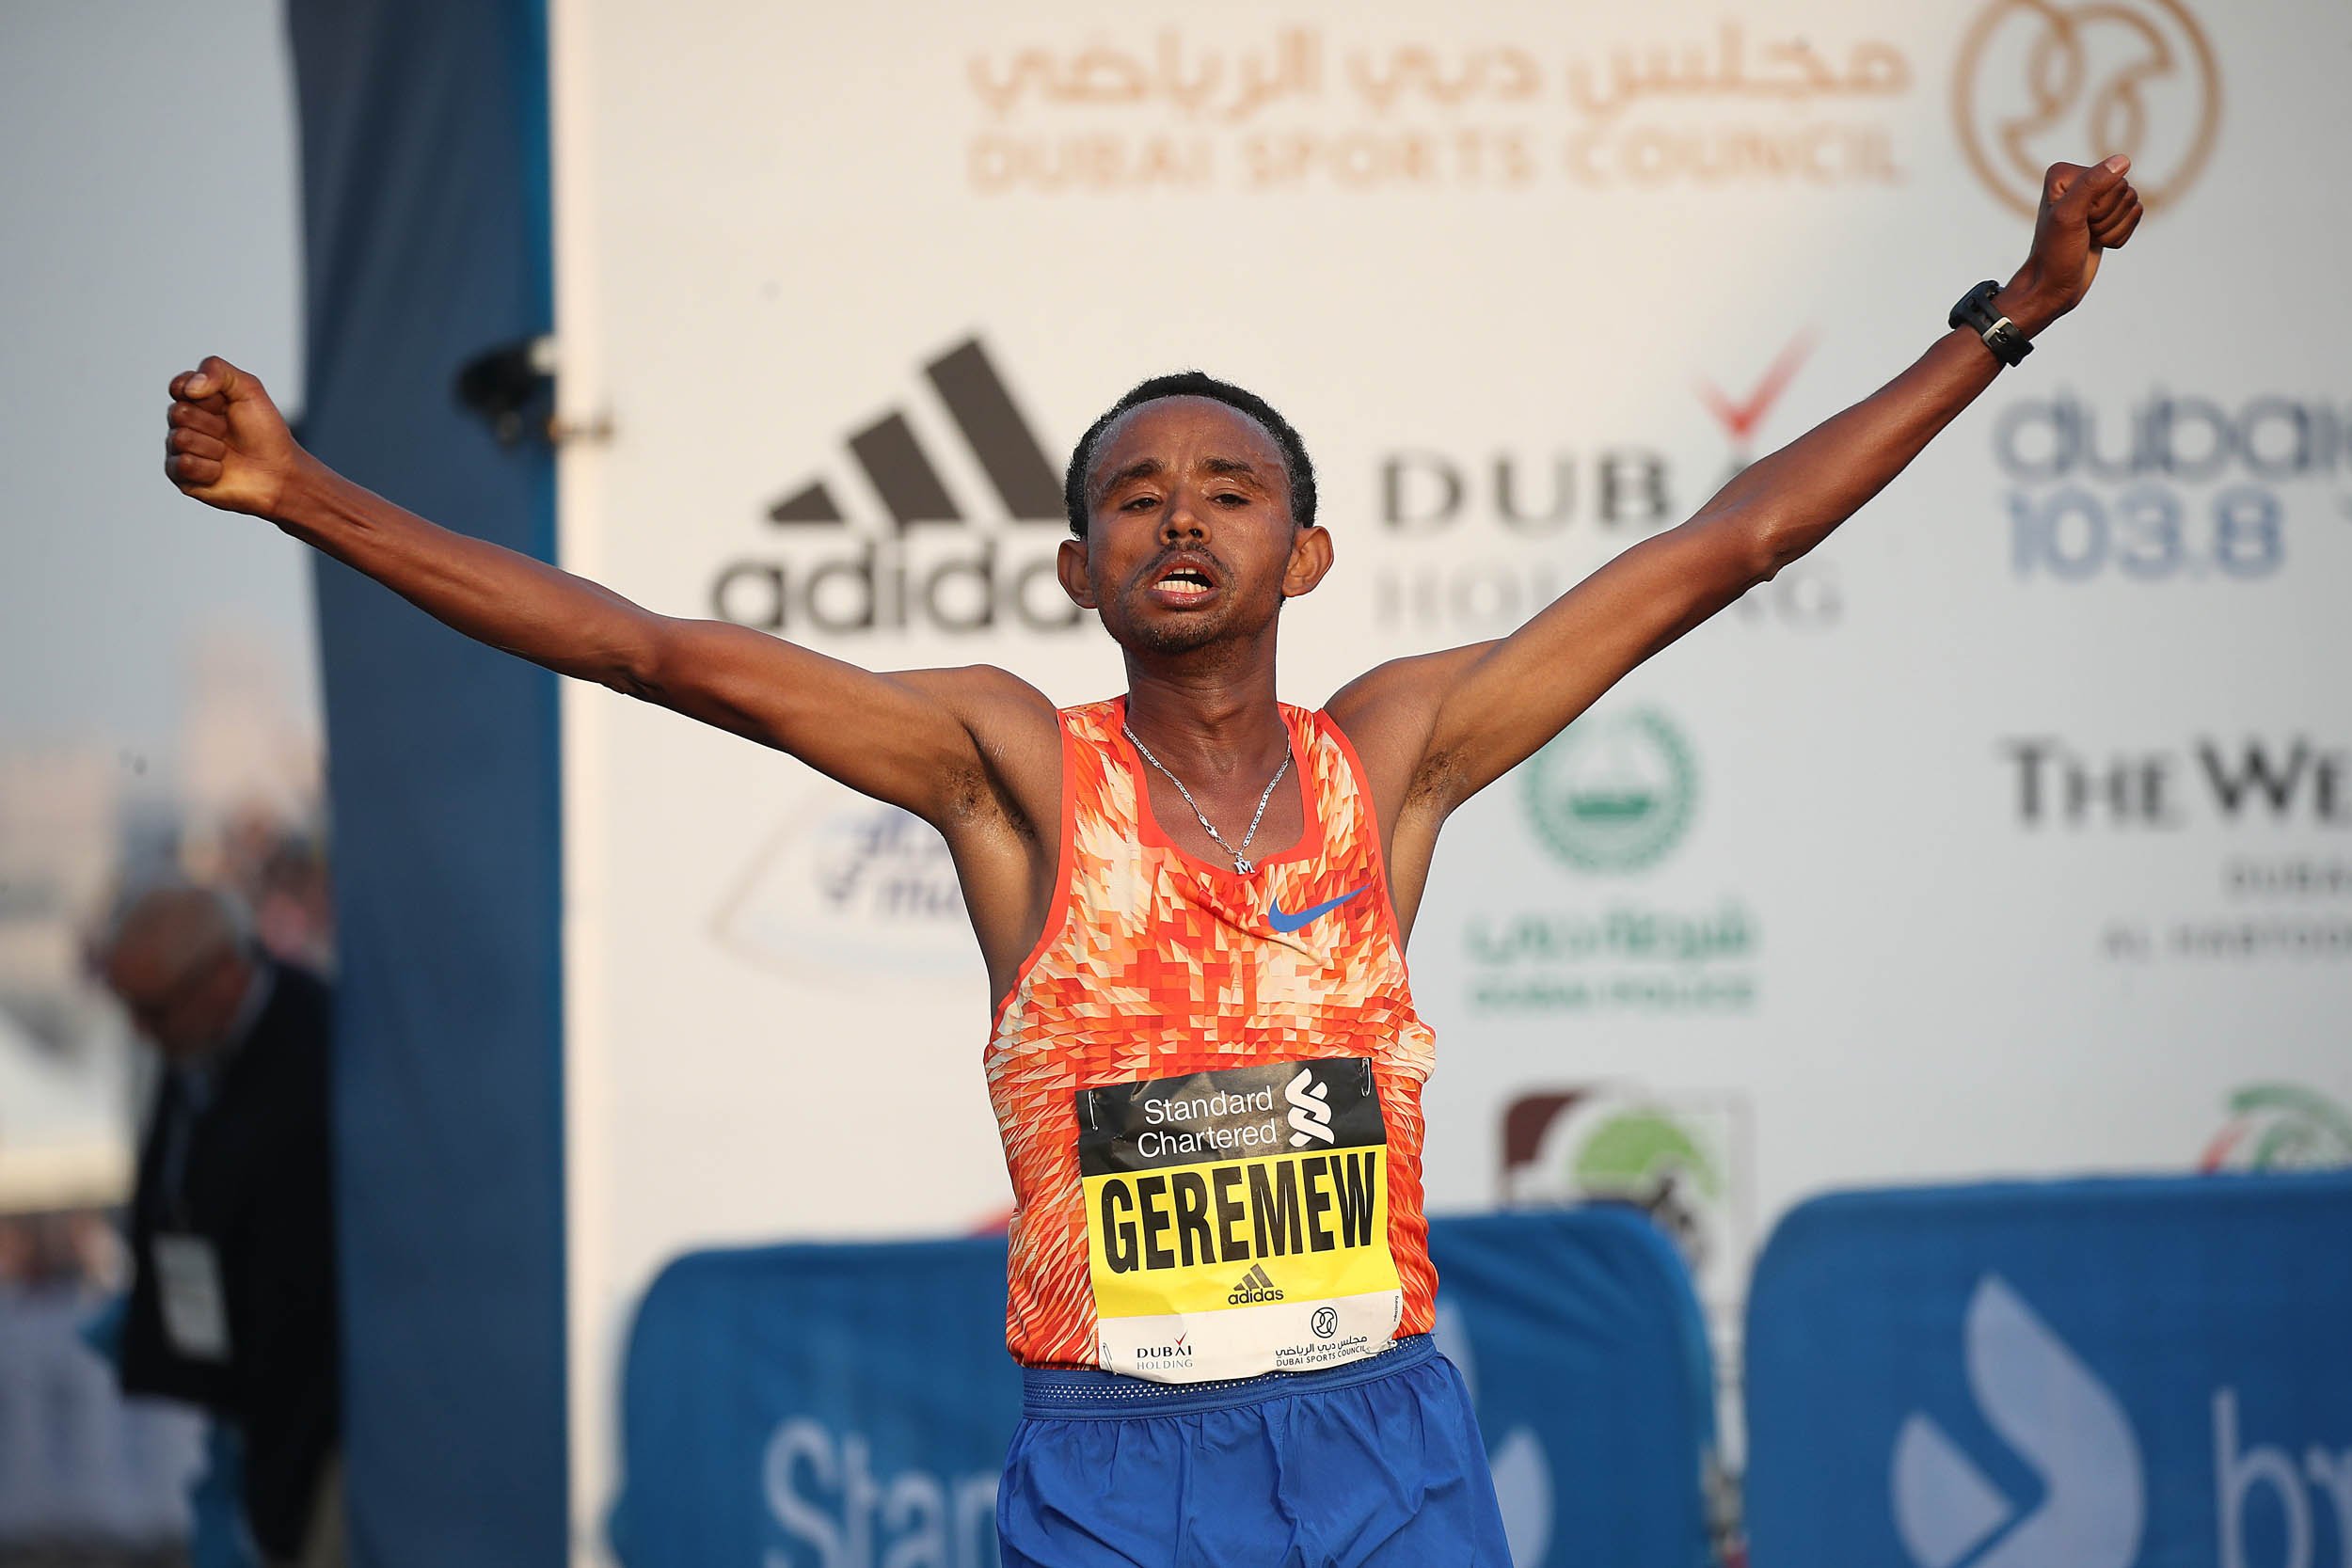 Dubai Marathon Slashes Prize Money And No Longer Is World's Richest